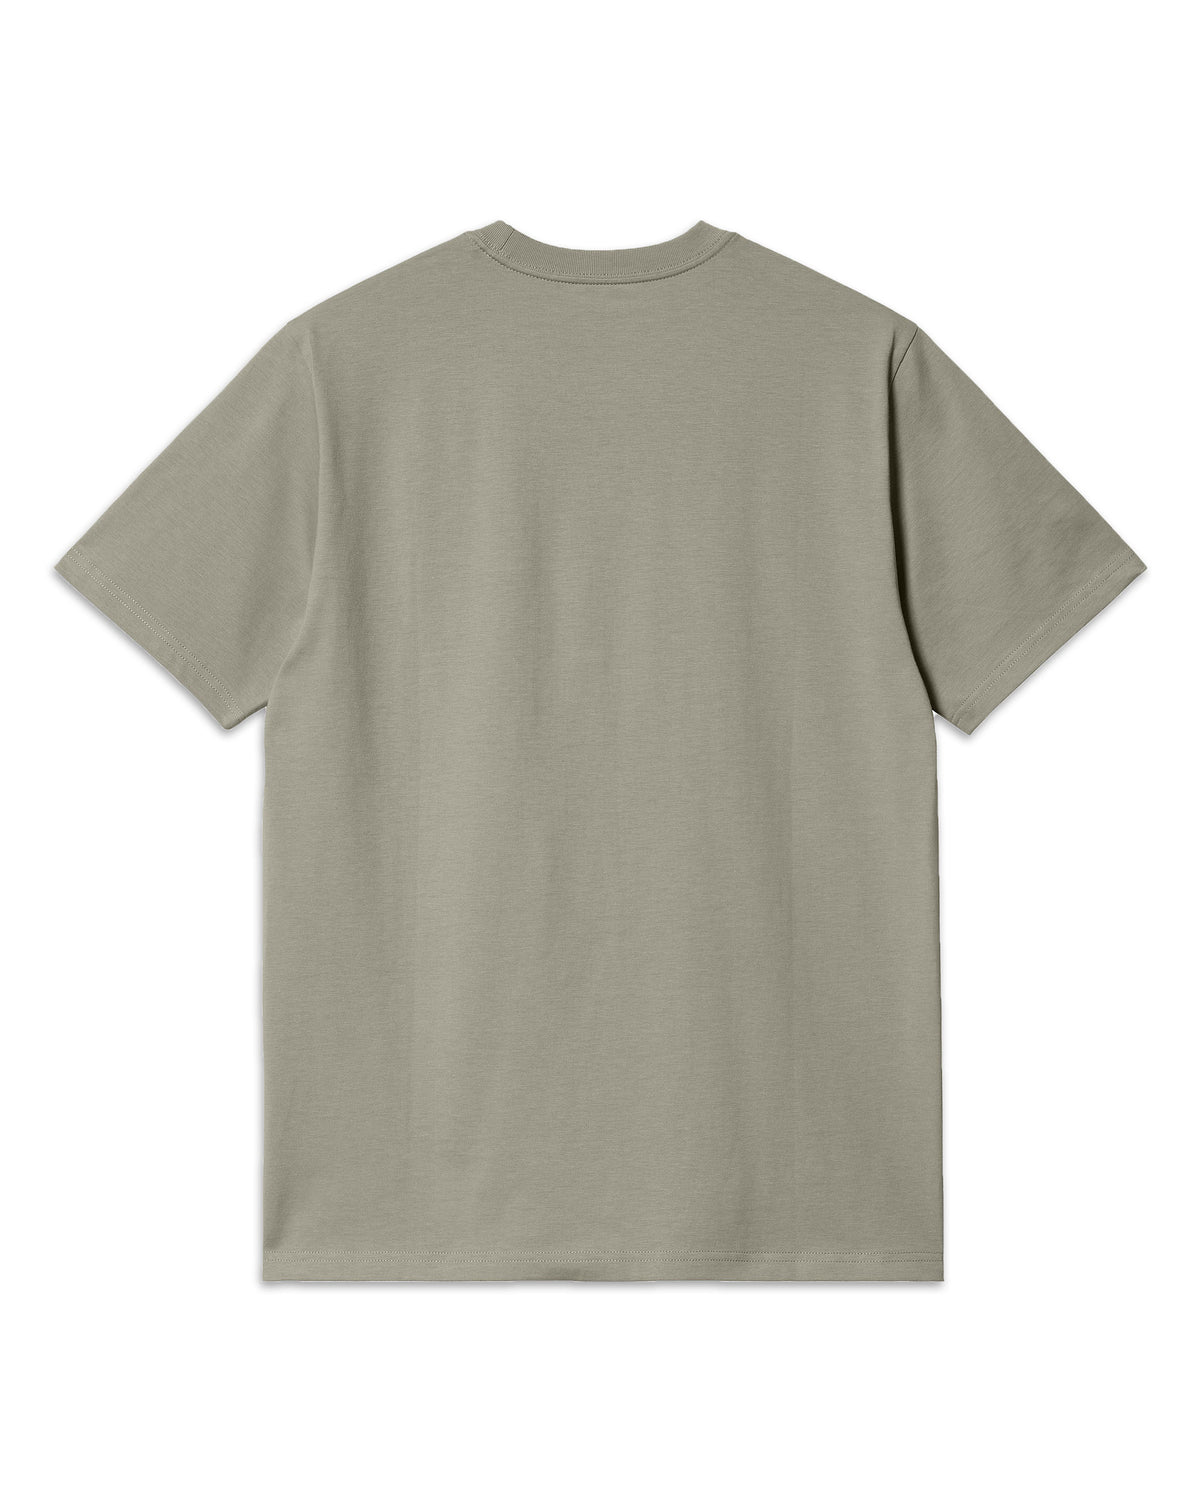 Carhartt Wip Pocket T-Shirt Yucca